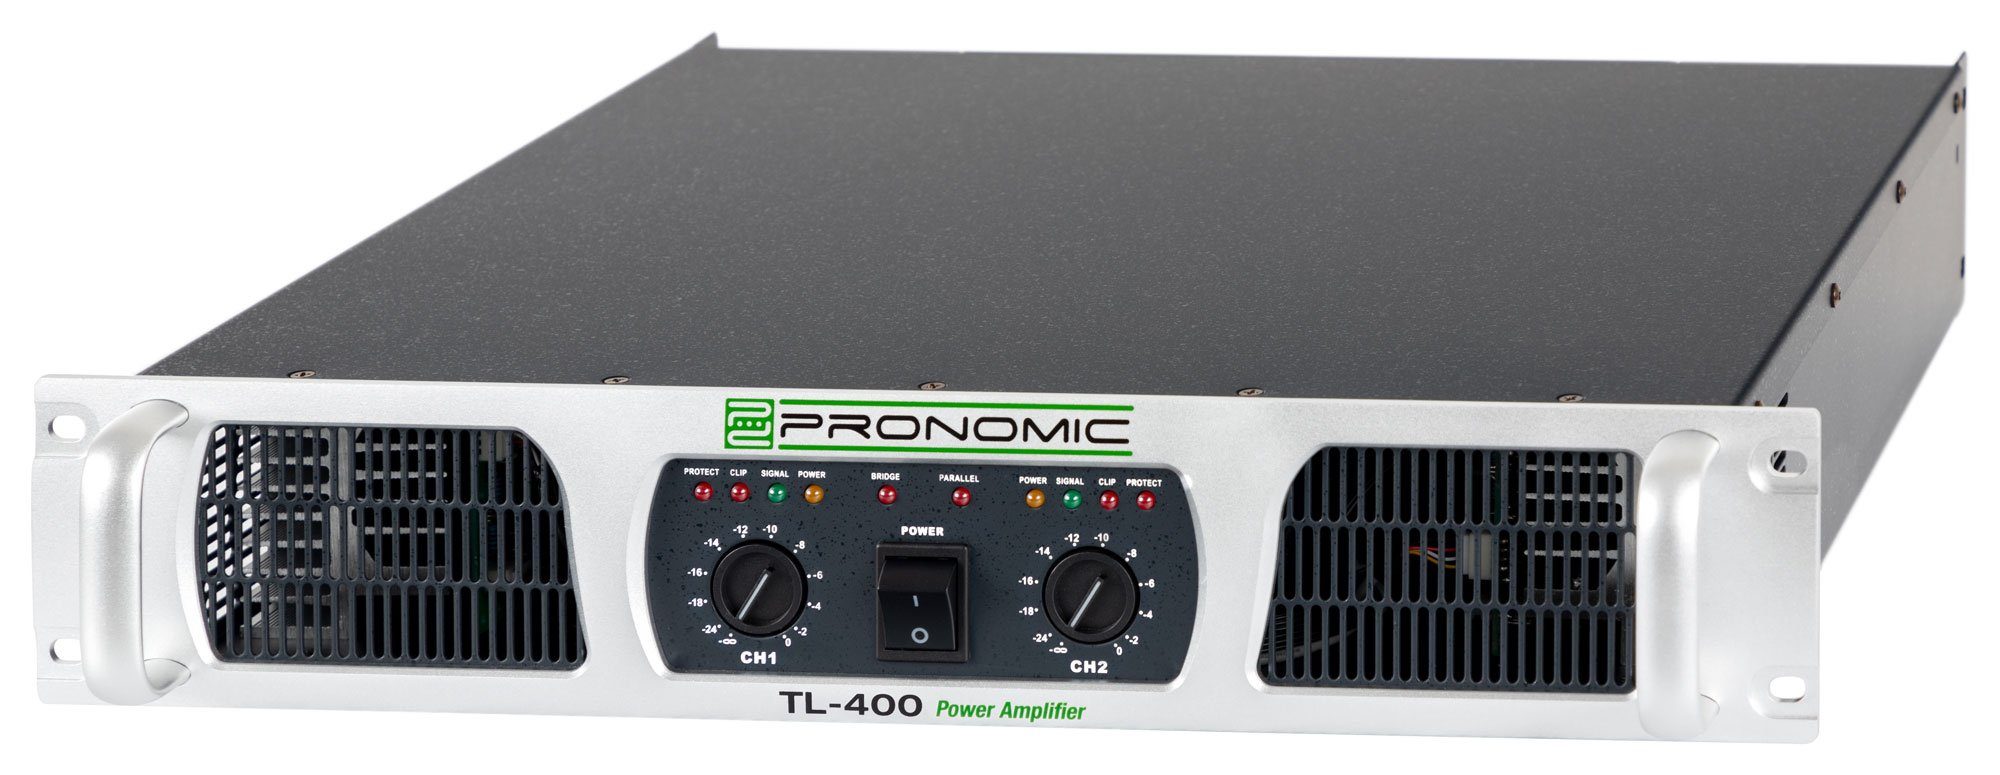 Schraubklemmen, 1000 Verstärker 2 Pronomic Watt Ohm) 2000 Kanäle: 2 2x (Anzahl Lautsprecher- Endstufe TL-400 an mit Kanal W, Stereo-Leistungsverstärker